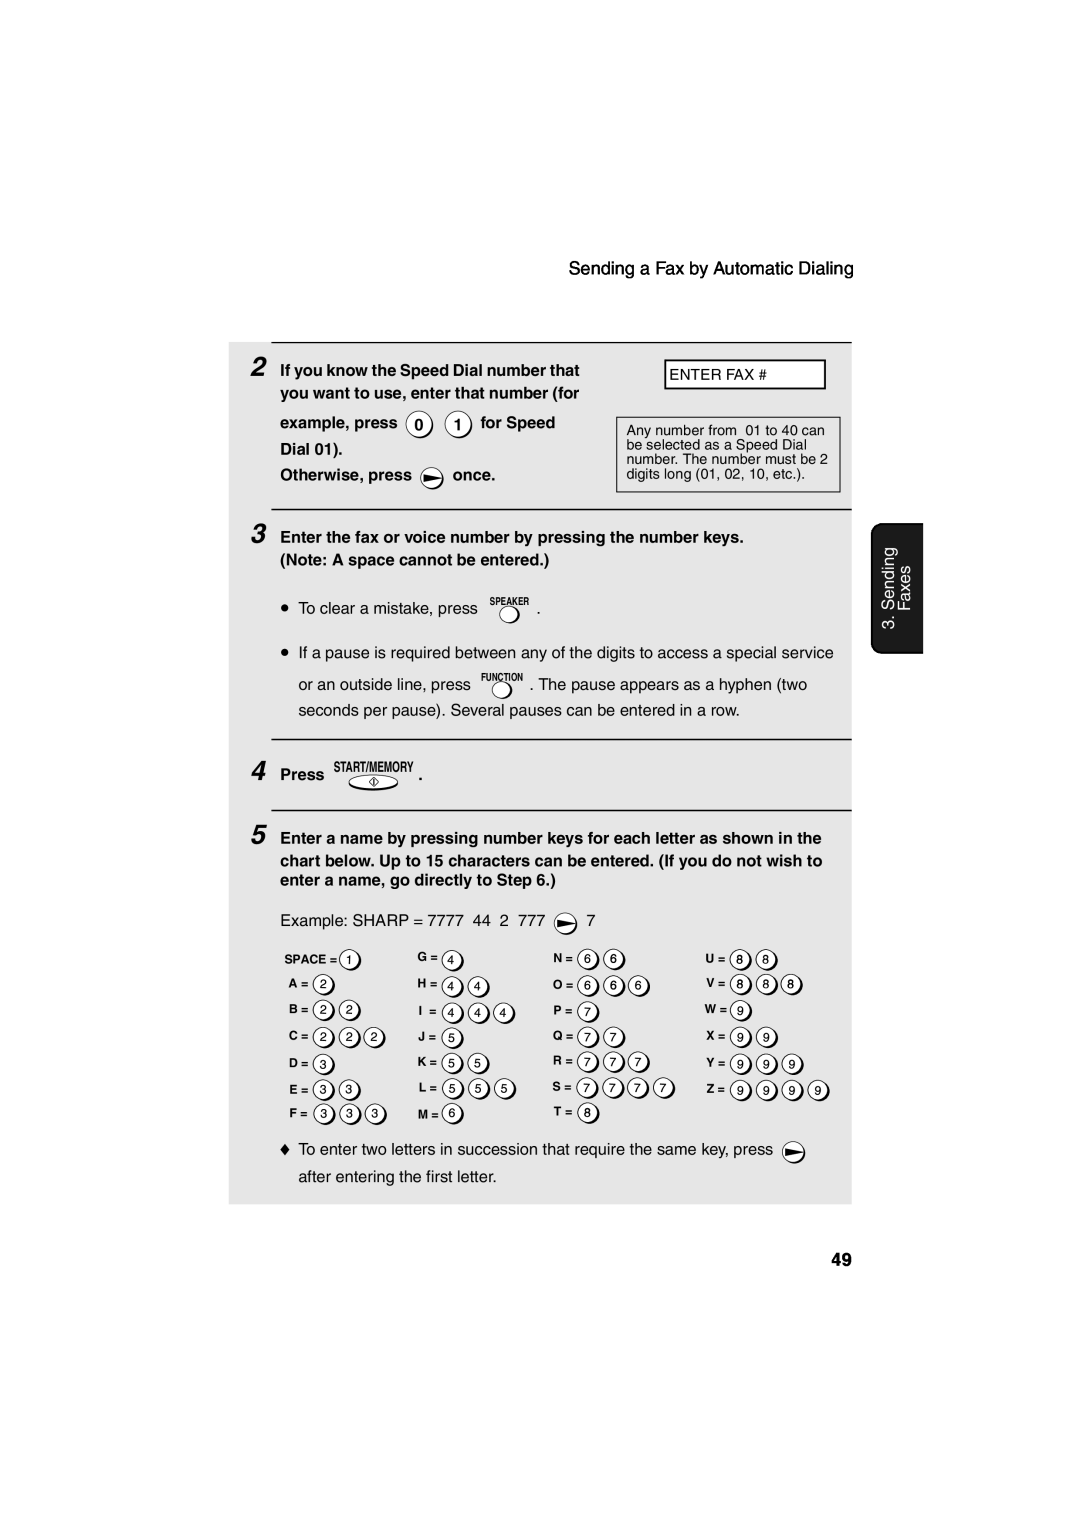 Sharp UX-A260 manual Sending, Faxes, Press START/MEMORY 